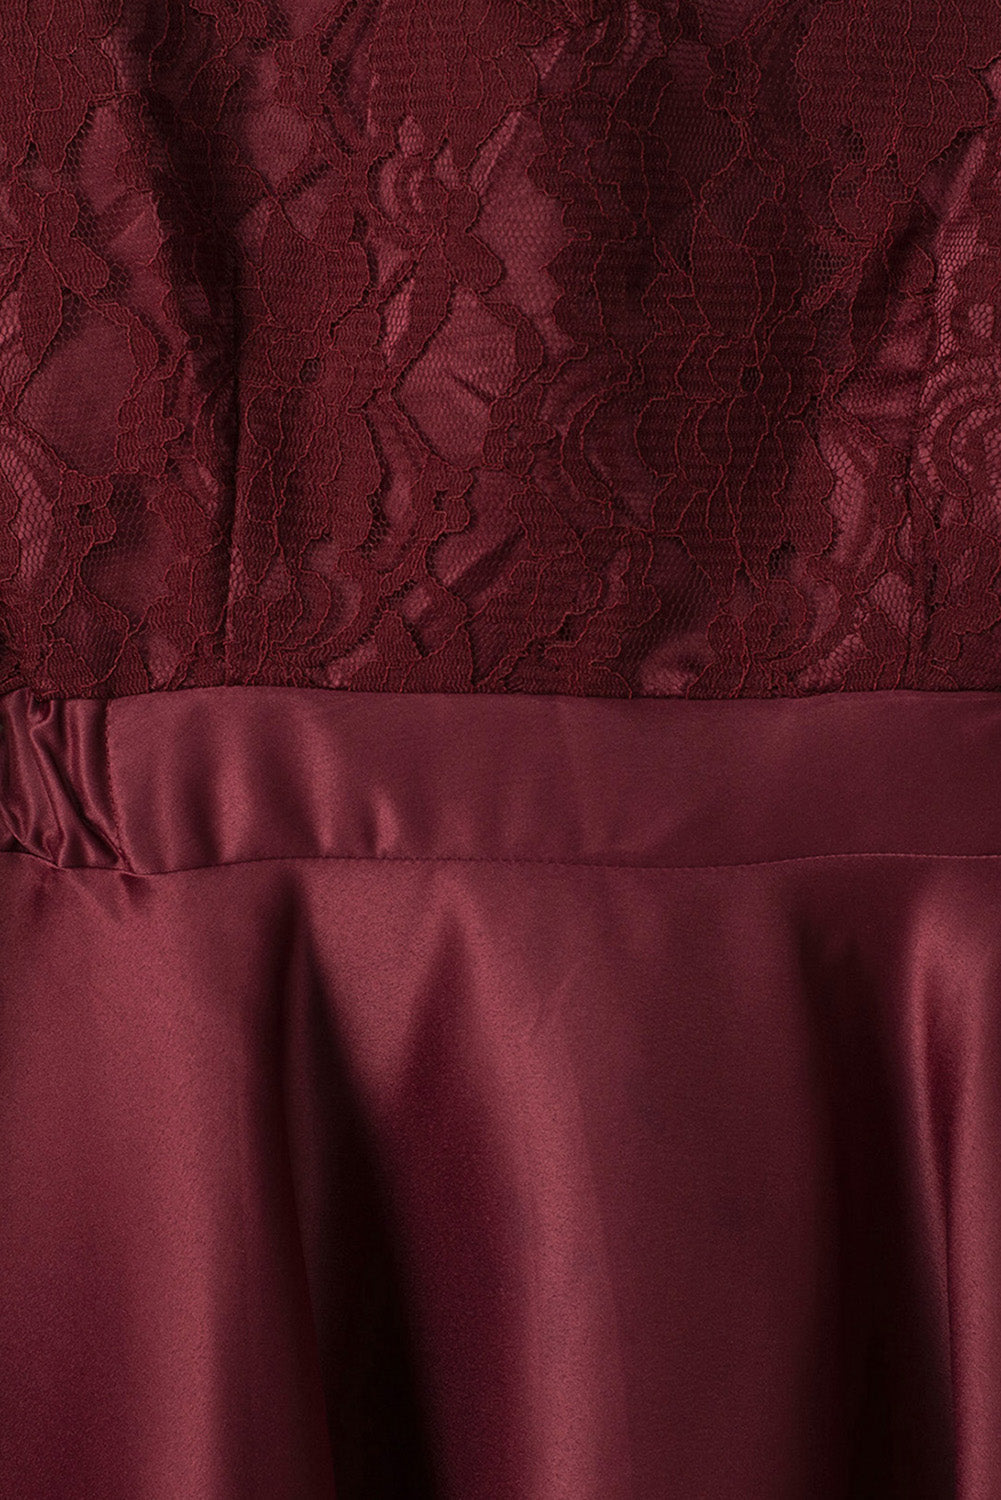 Spliced Lace High-Low Long Sleeve Dress OniTakai